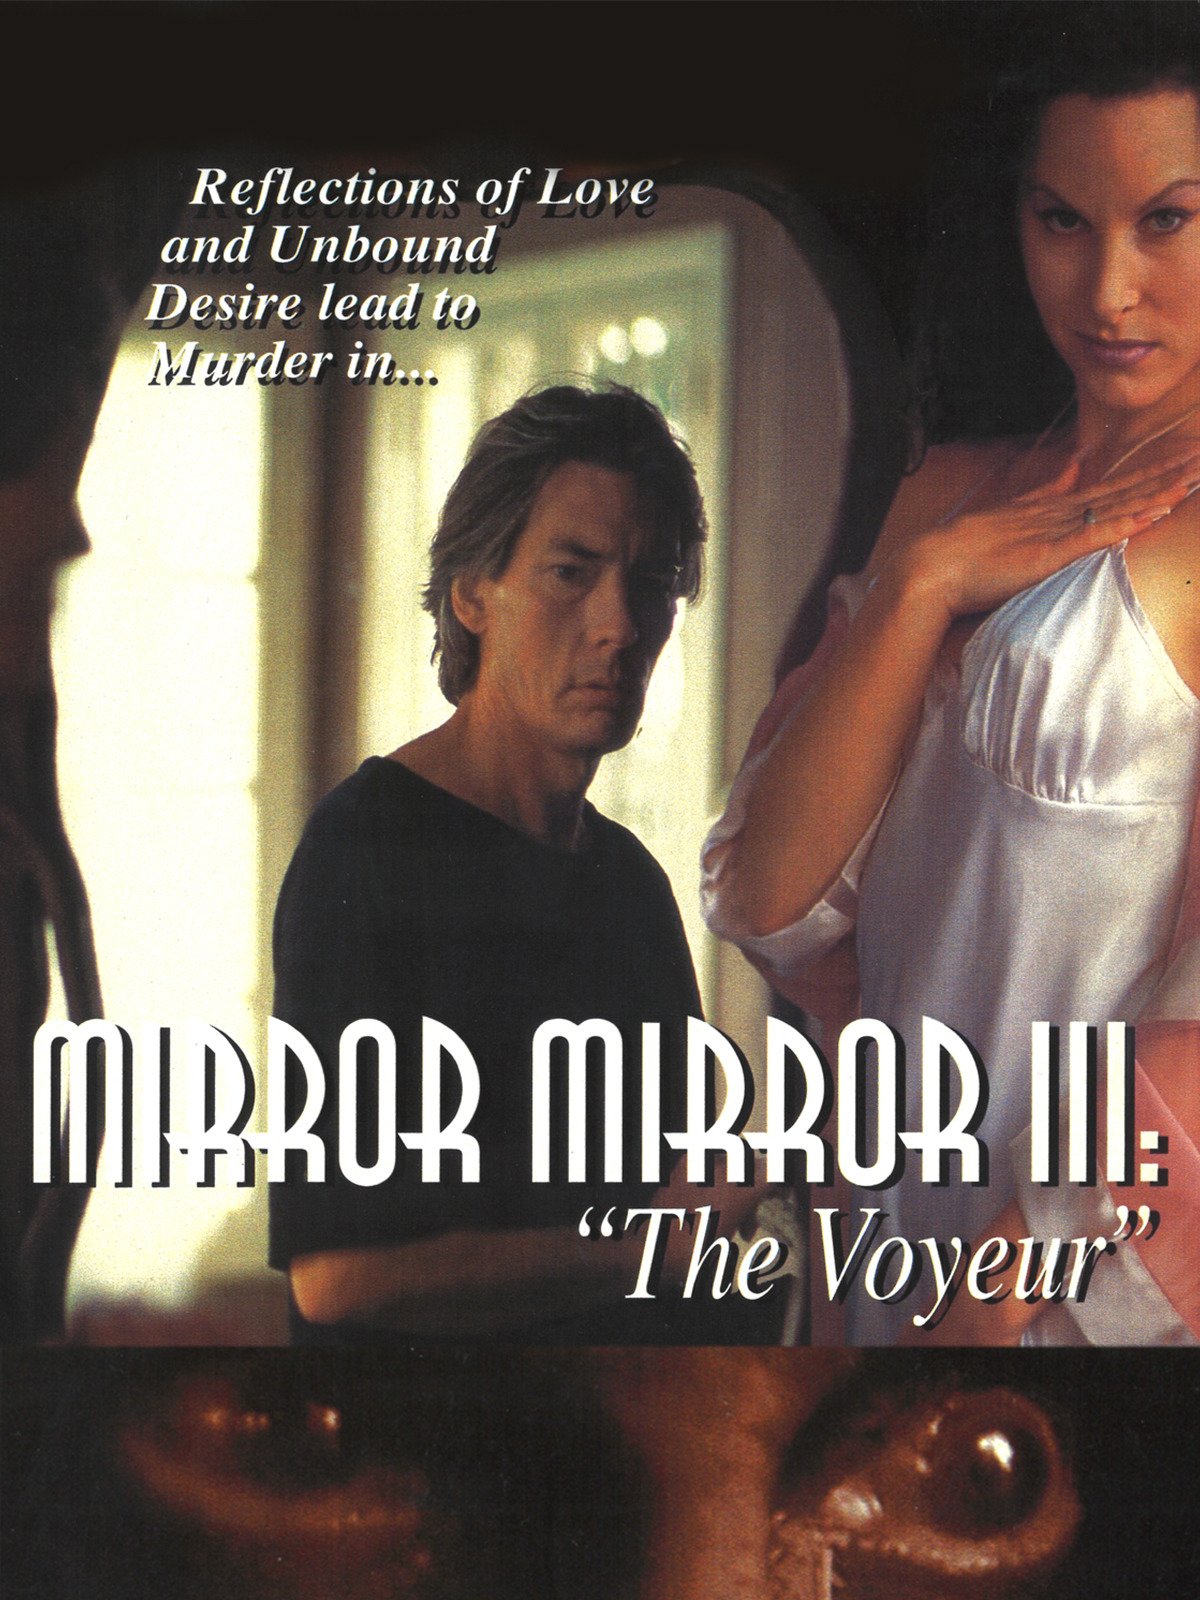 mirror mirror iii the voyeur